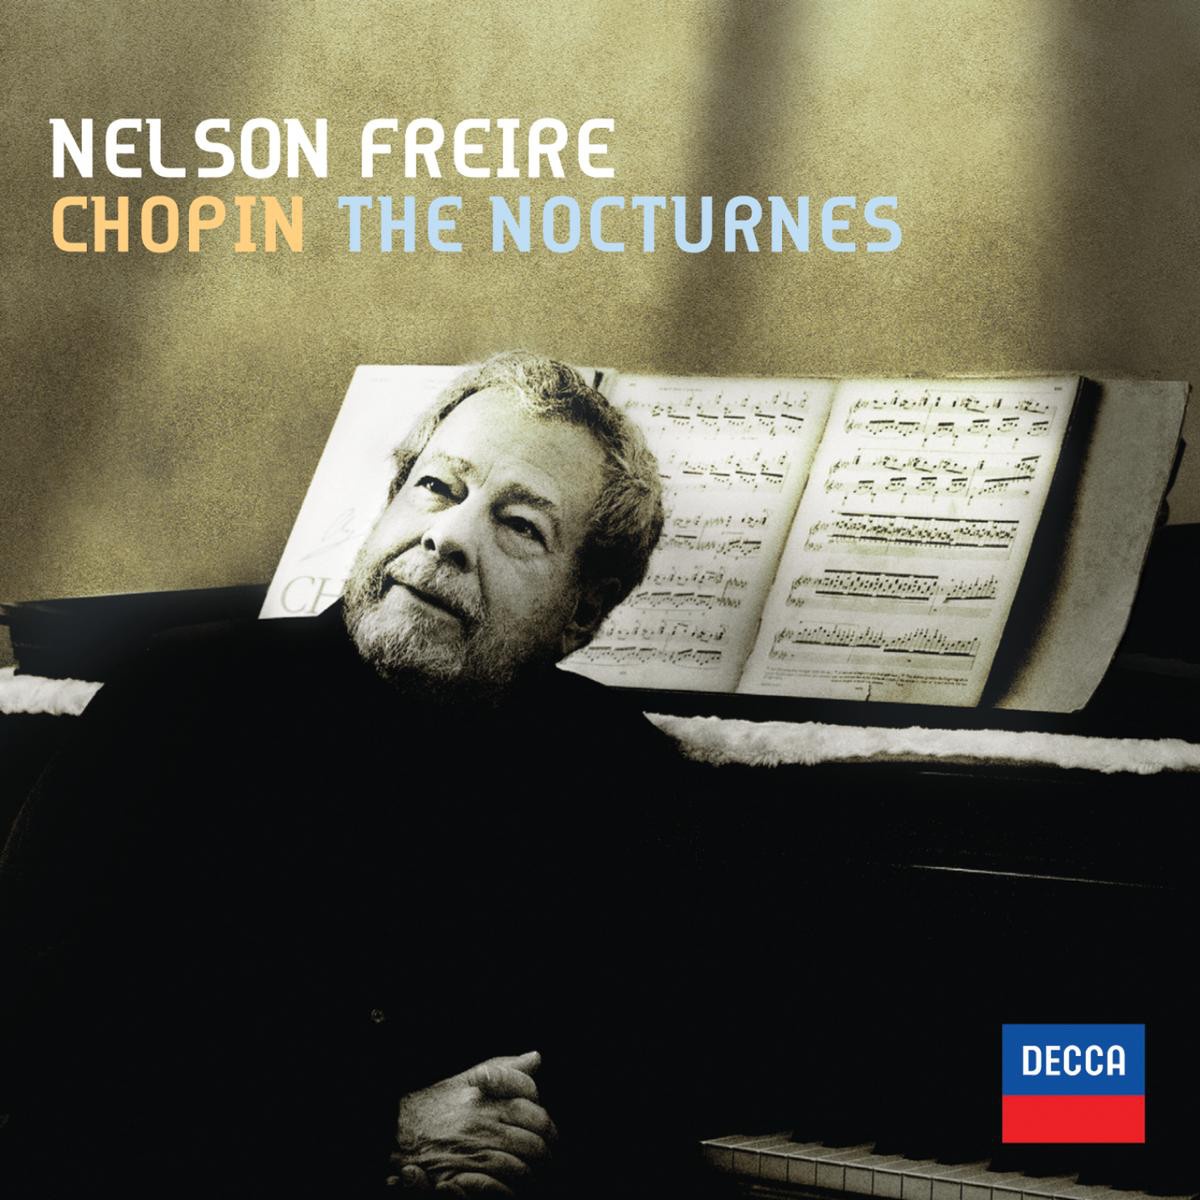 Chopin: Nocturne No.6 in G minor, Op.15 No.3